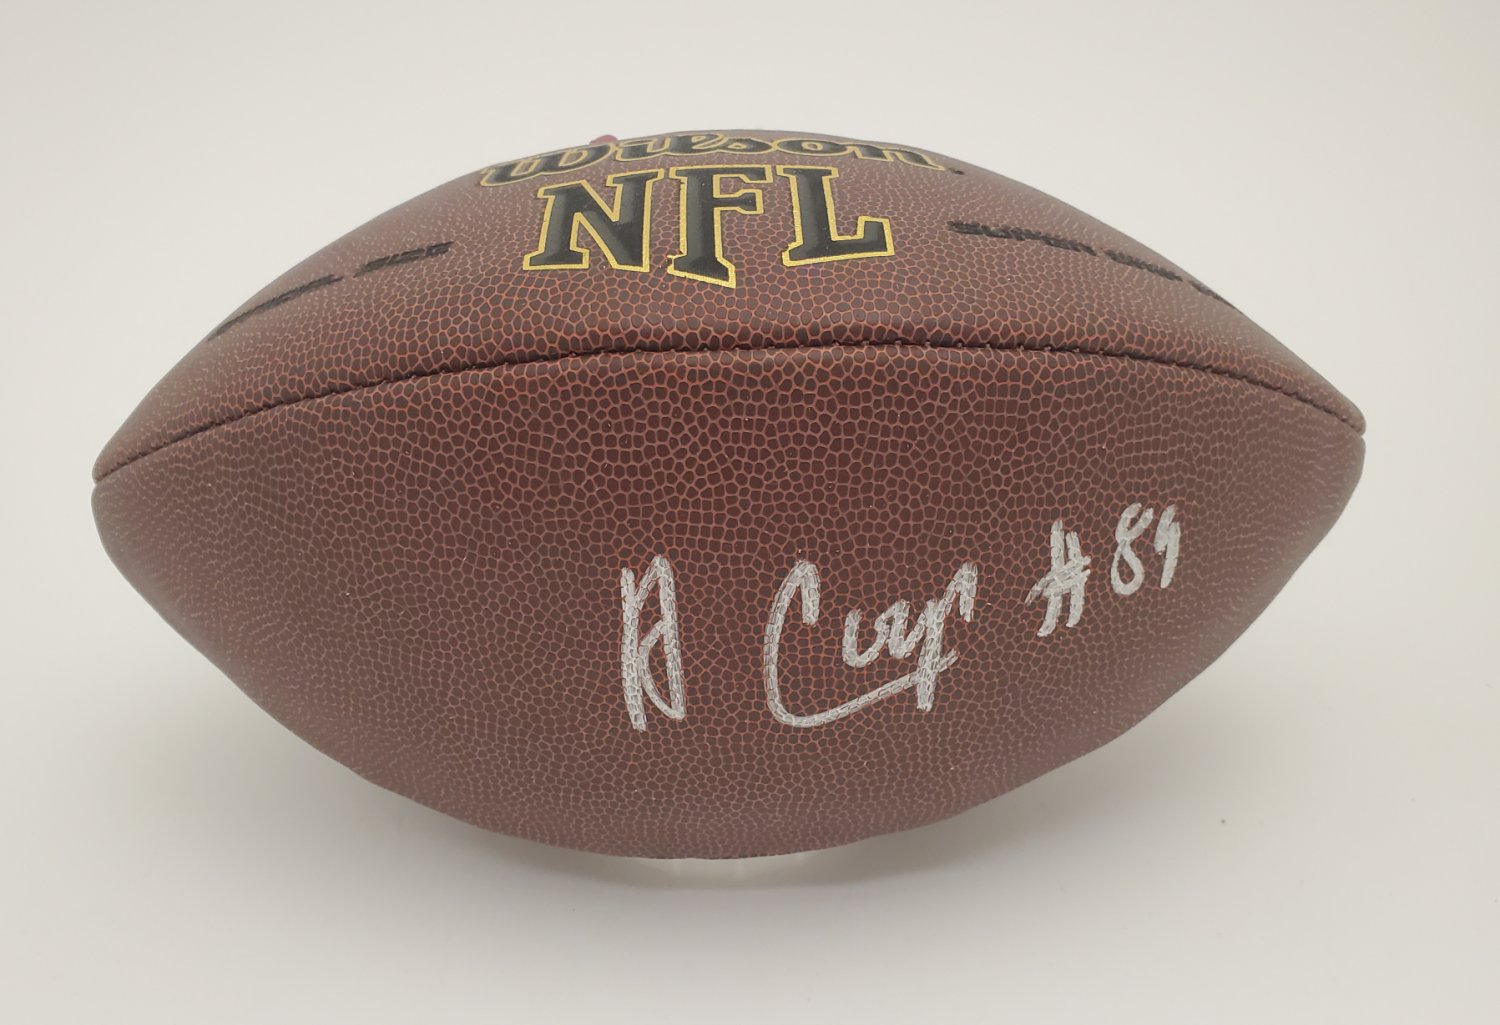 Amari Cooper Cleveland Browns Autographed Signed NFL Supergrip